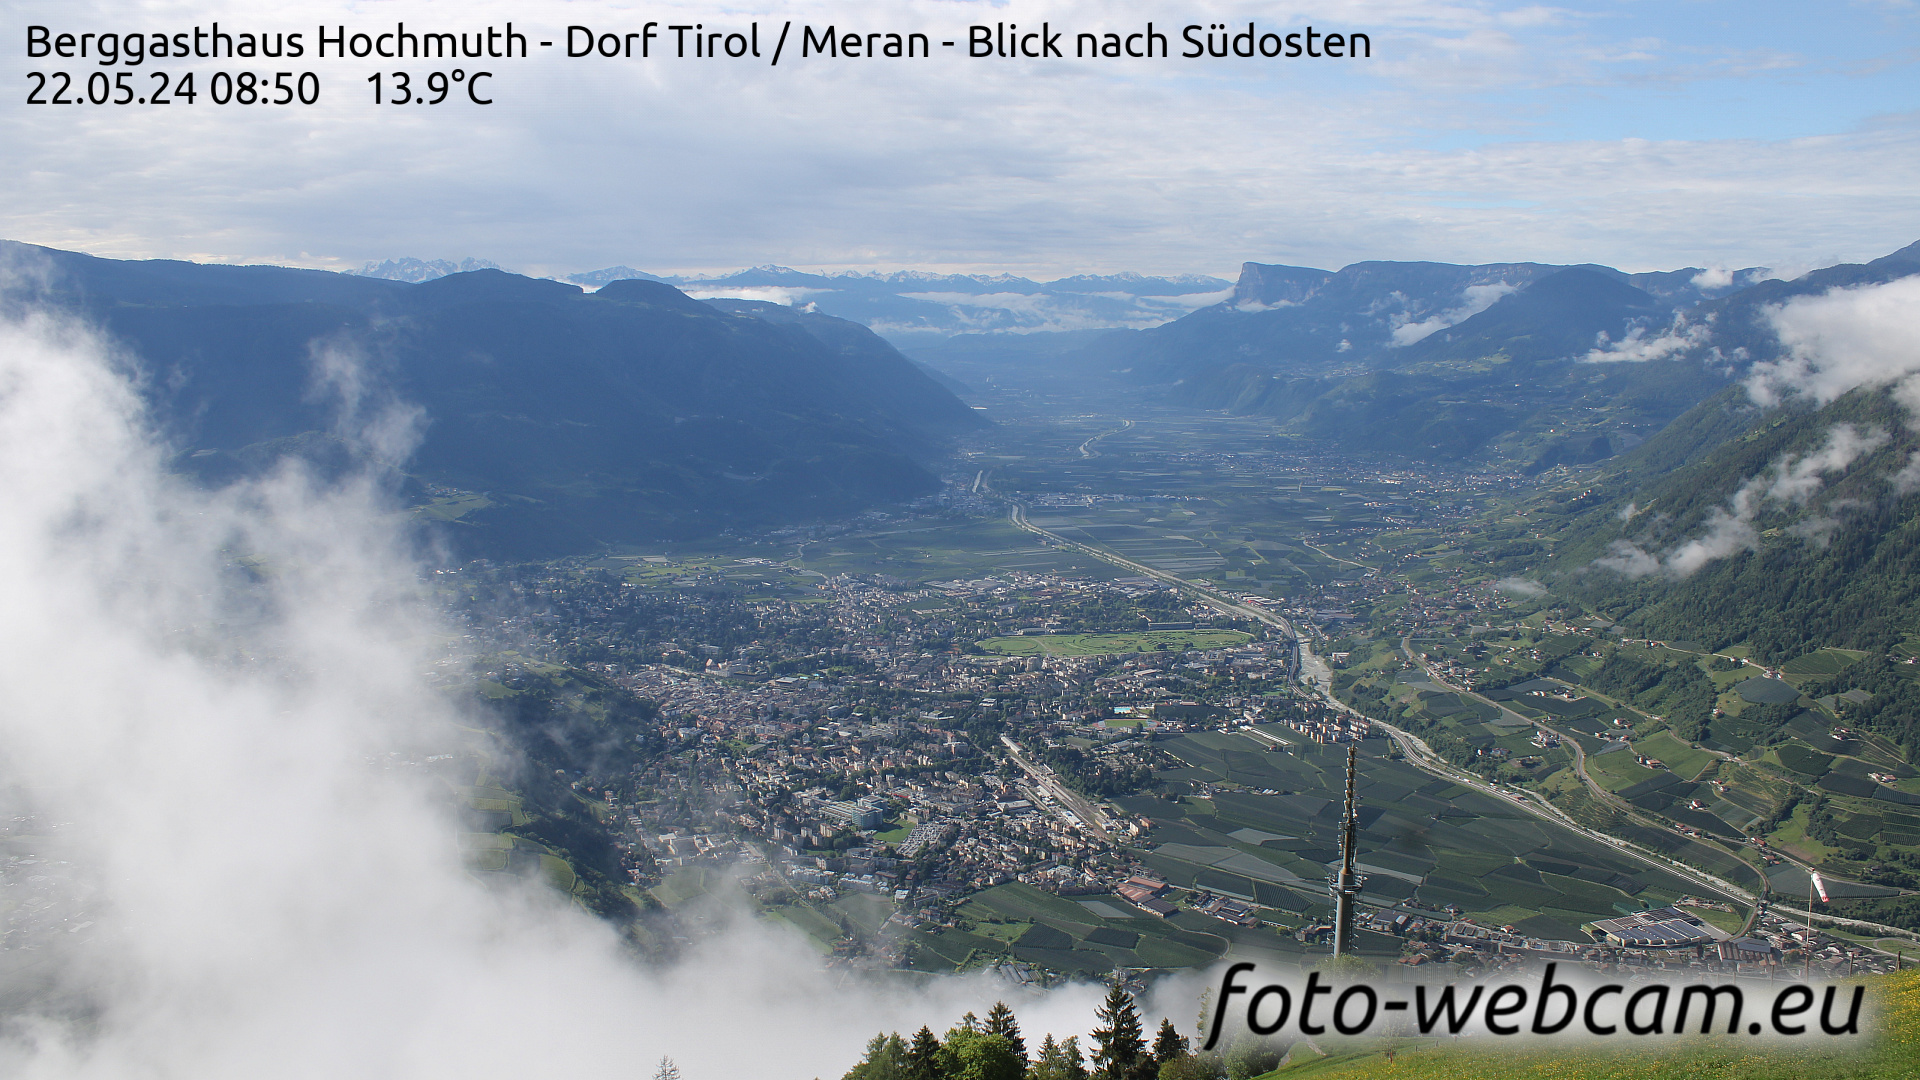 Dorf Tirol Ma. 08:56